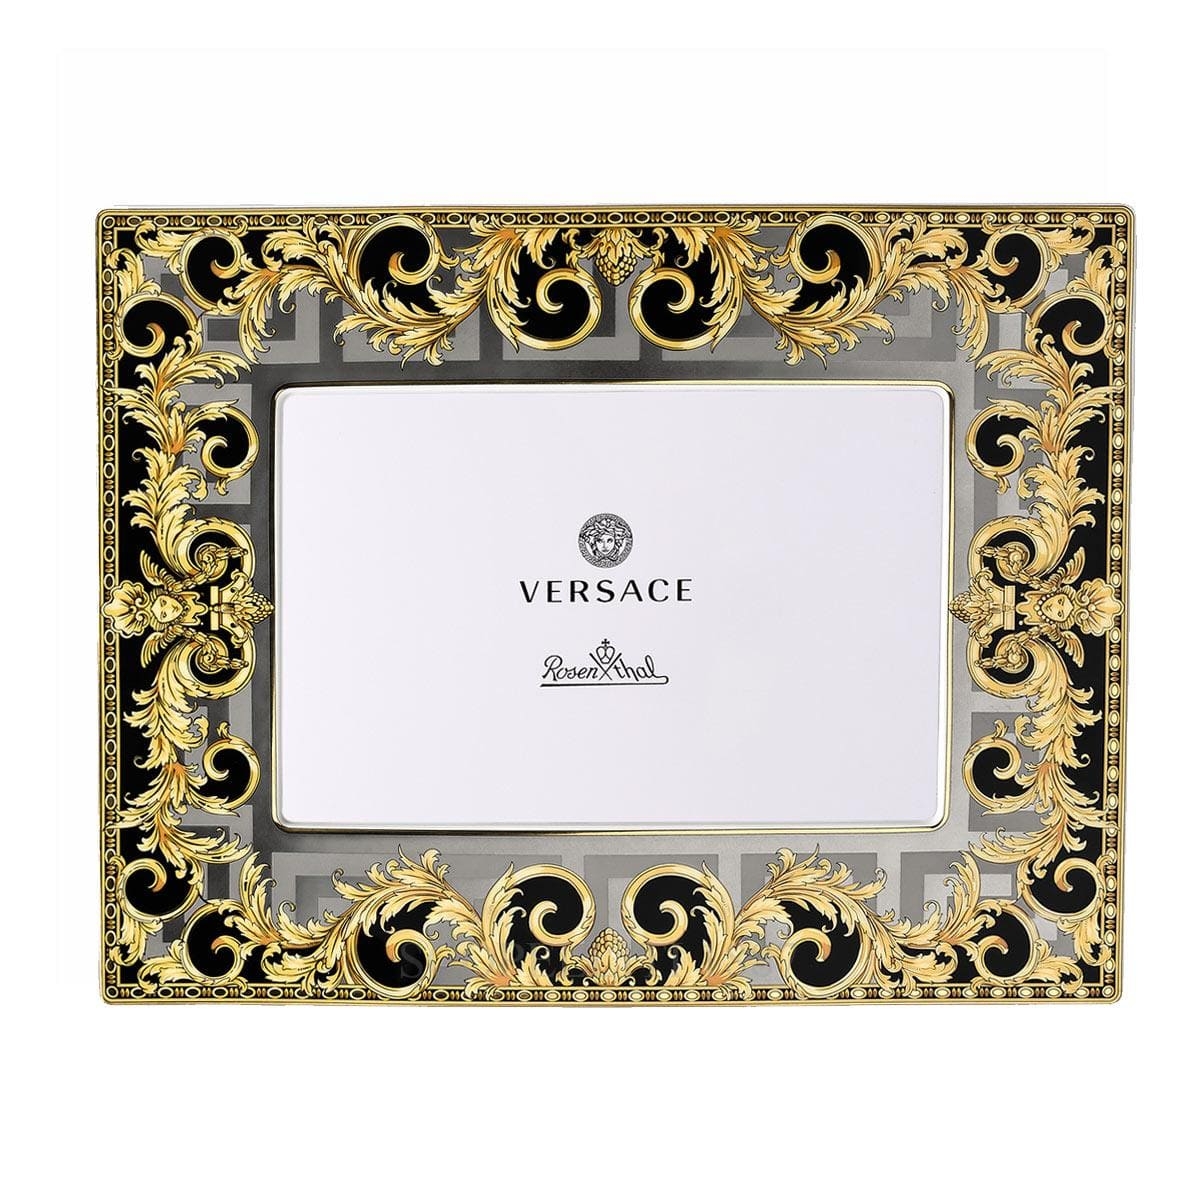 Prestige Gala Versace frame | Versace - Rosenthal